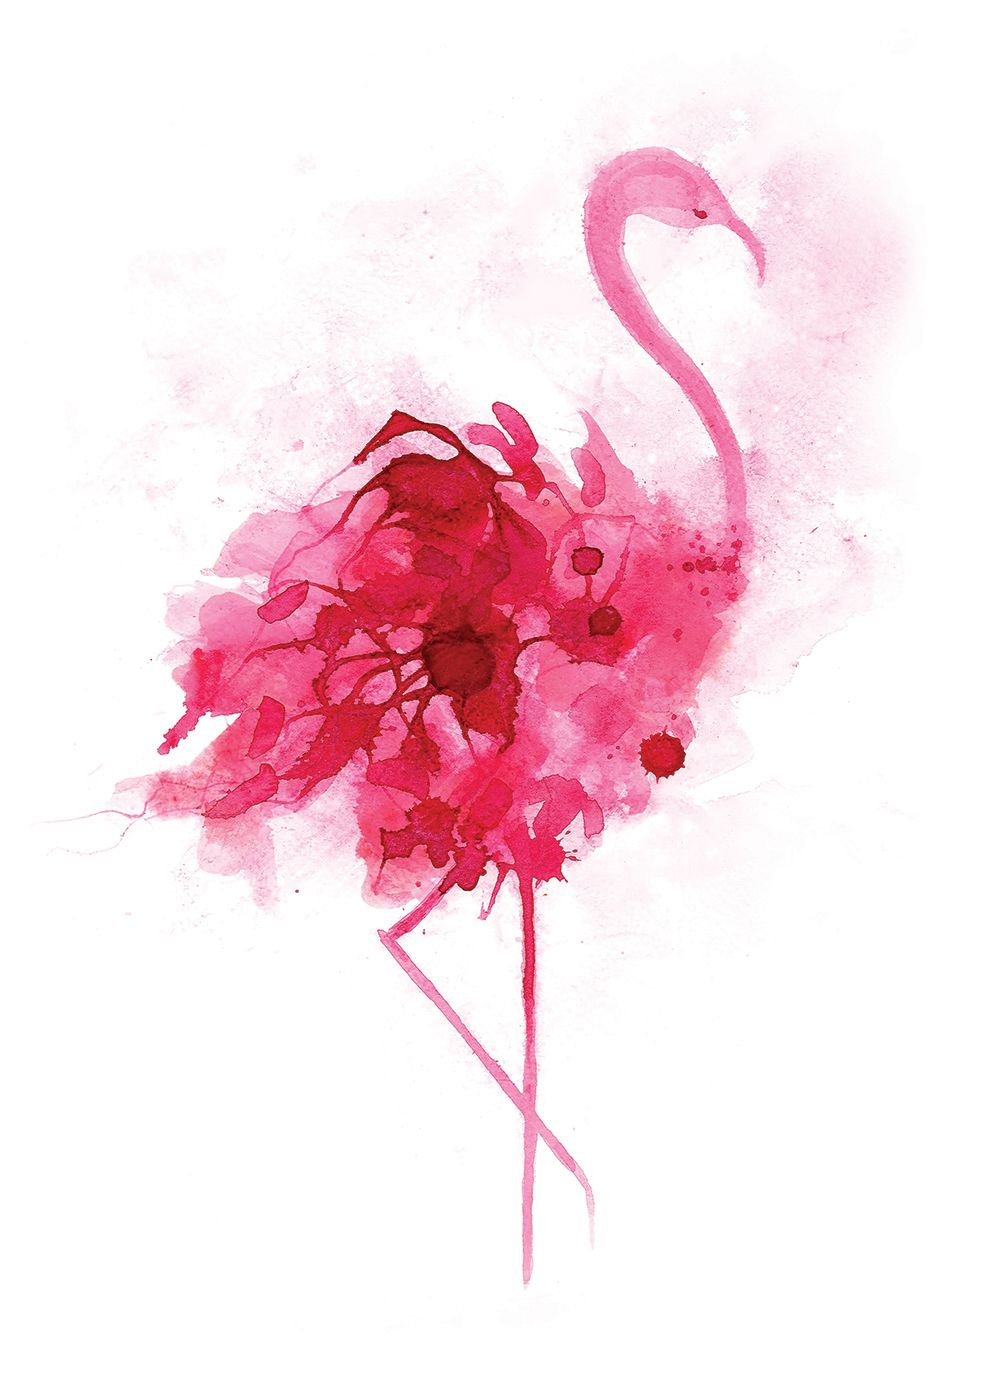 Flamingo by Gavin Dobson